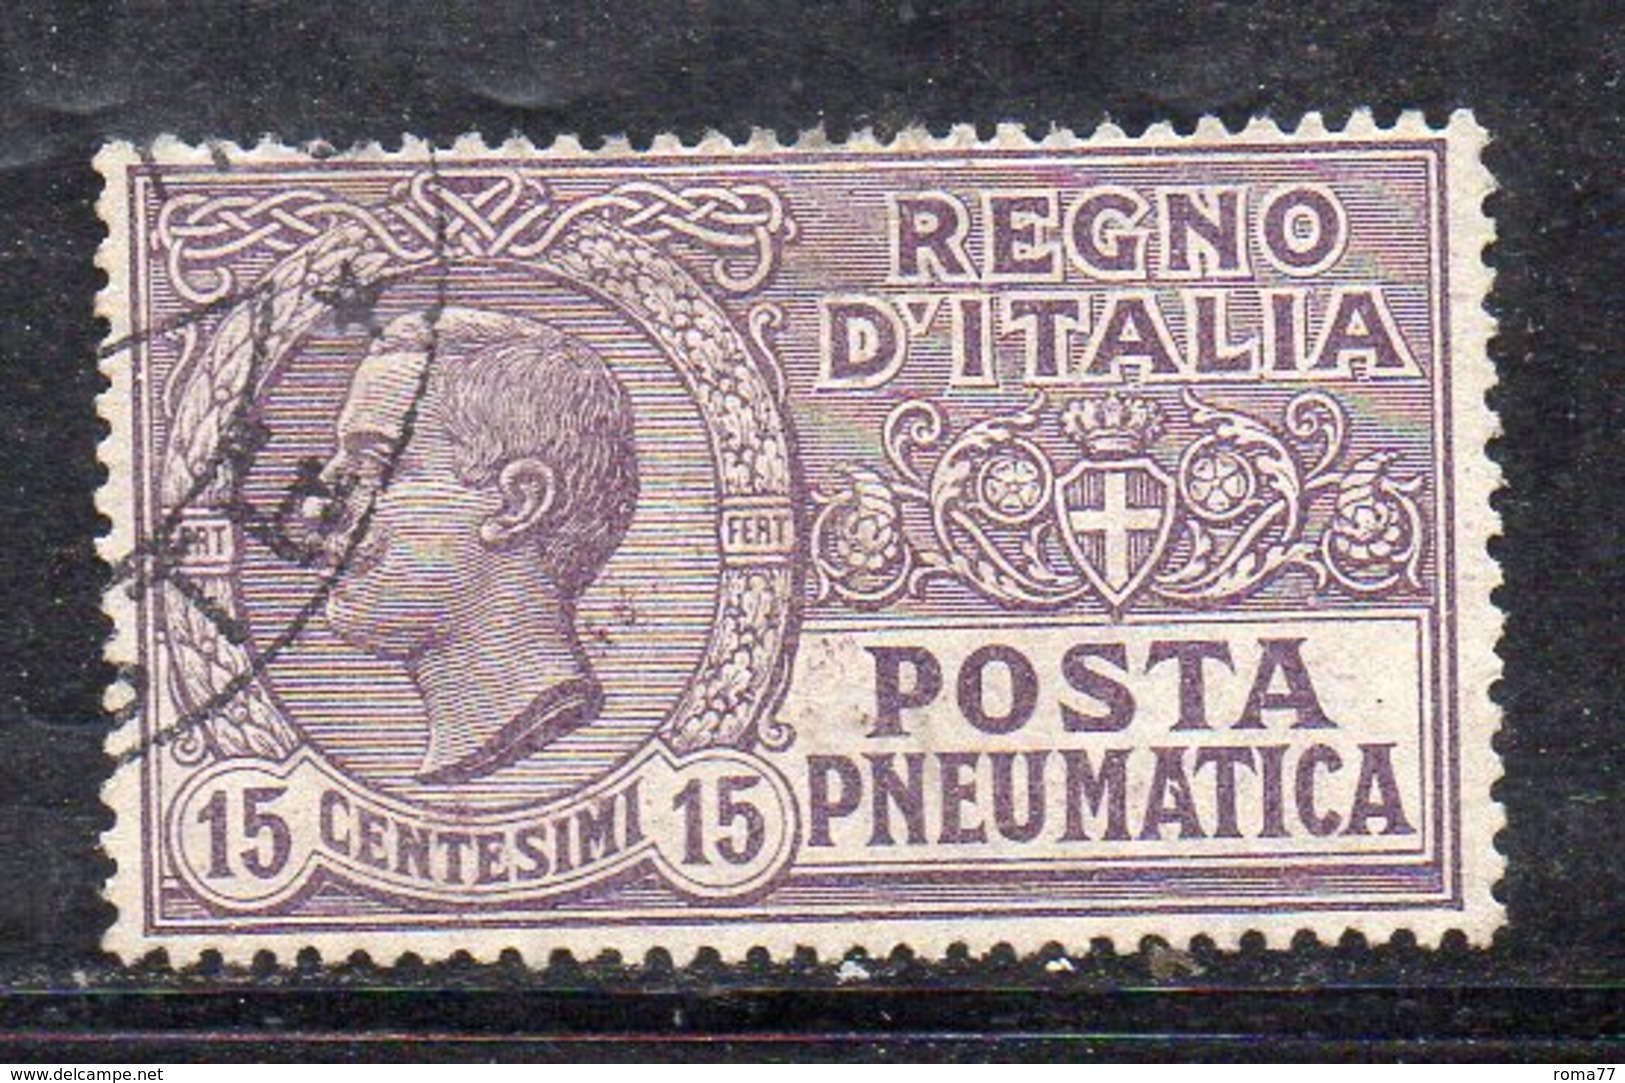 T26 - REGNO 1913 , Posta Pneumatica  15 Cent. N. 2 Usato (M2200) - Pneumatische Post